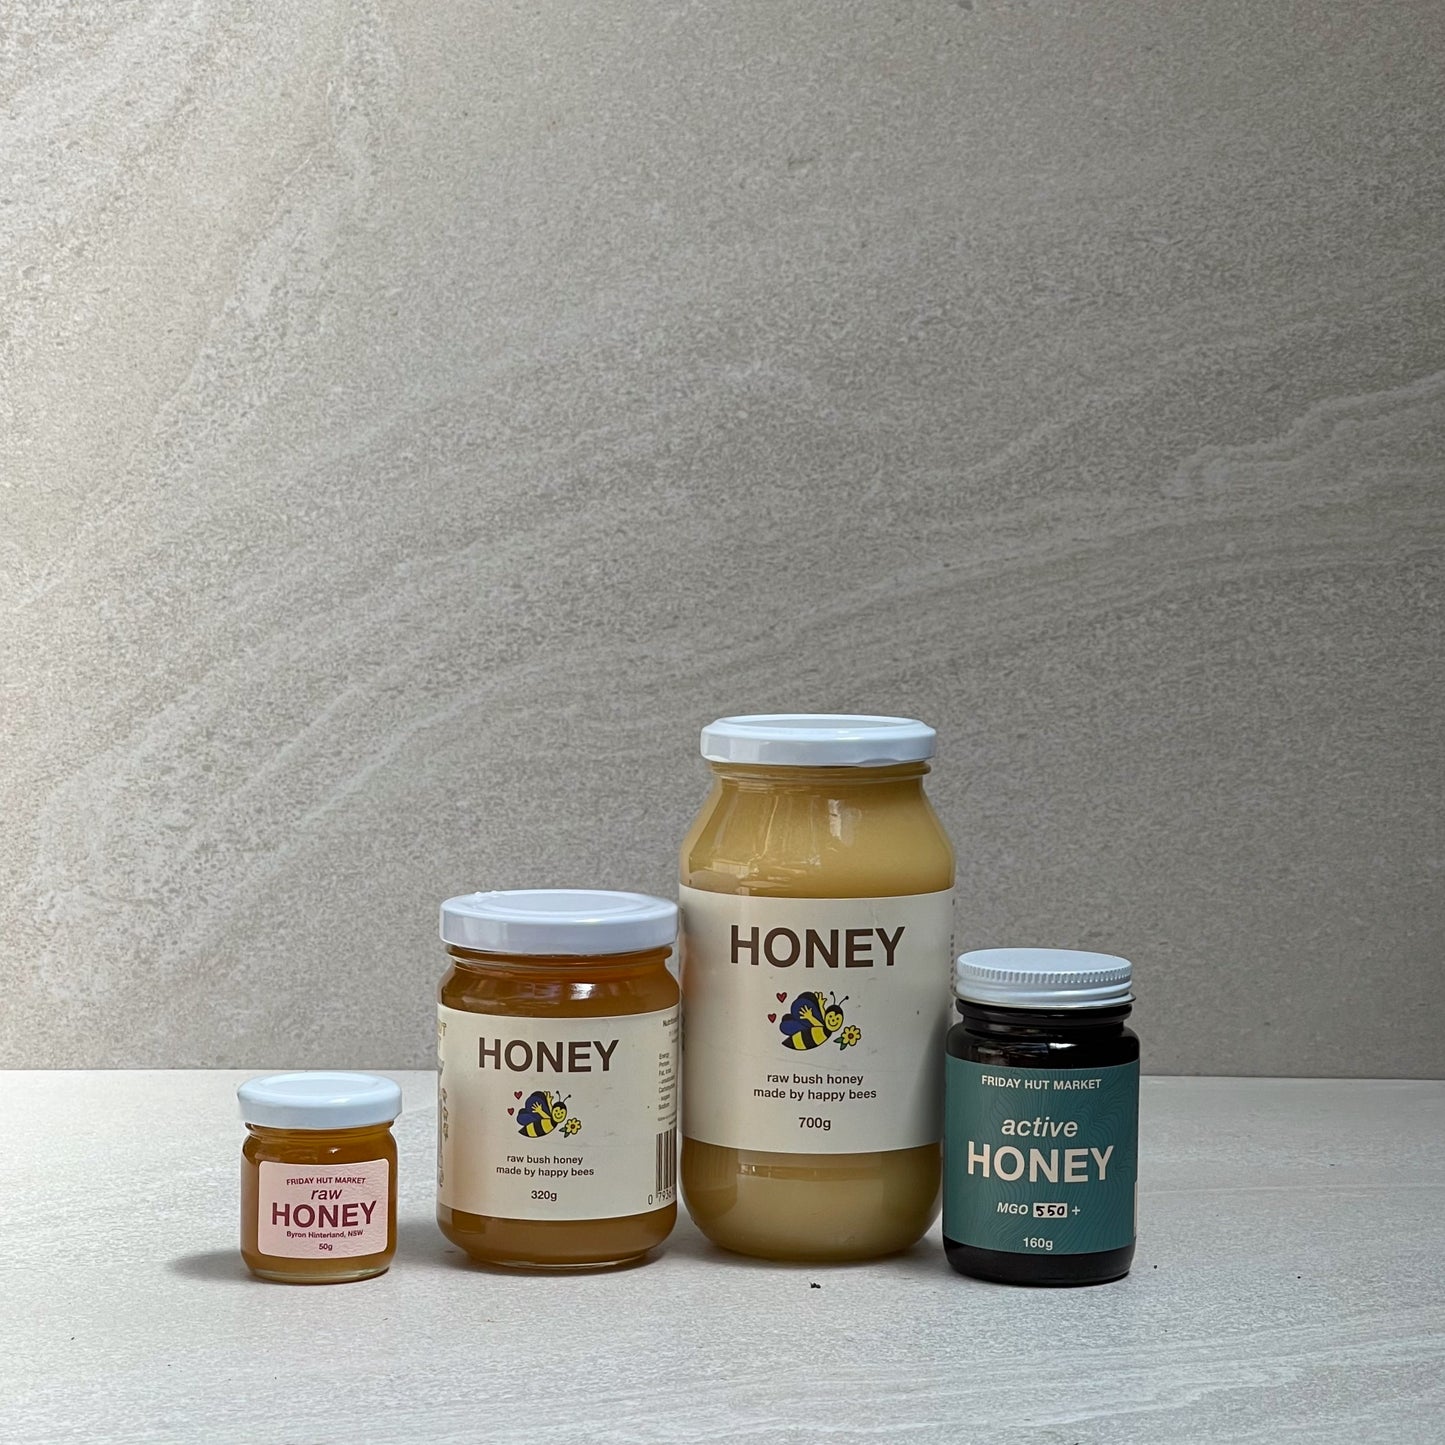 A collection of 50g, 320g and 700g jars of Friday Hut Market Raw Bush Honey sit alongside a jar of MGO 550+ Active Jellybush Manuka Honey.